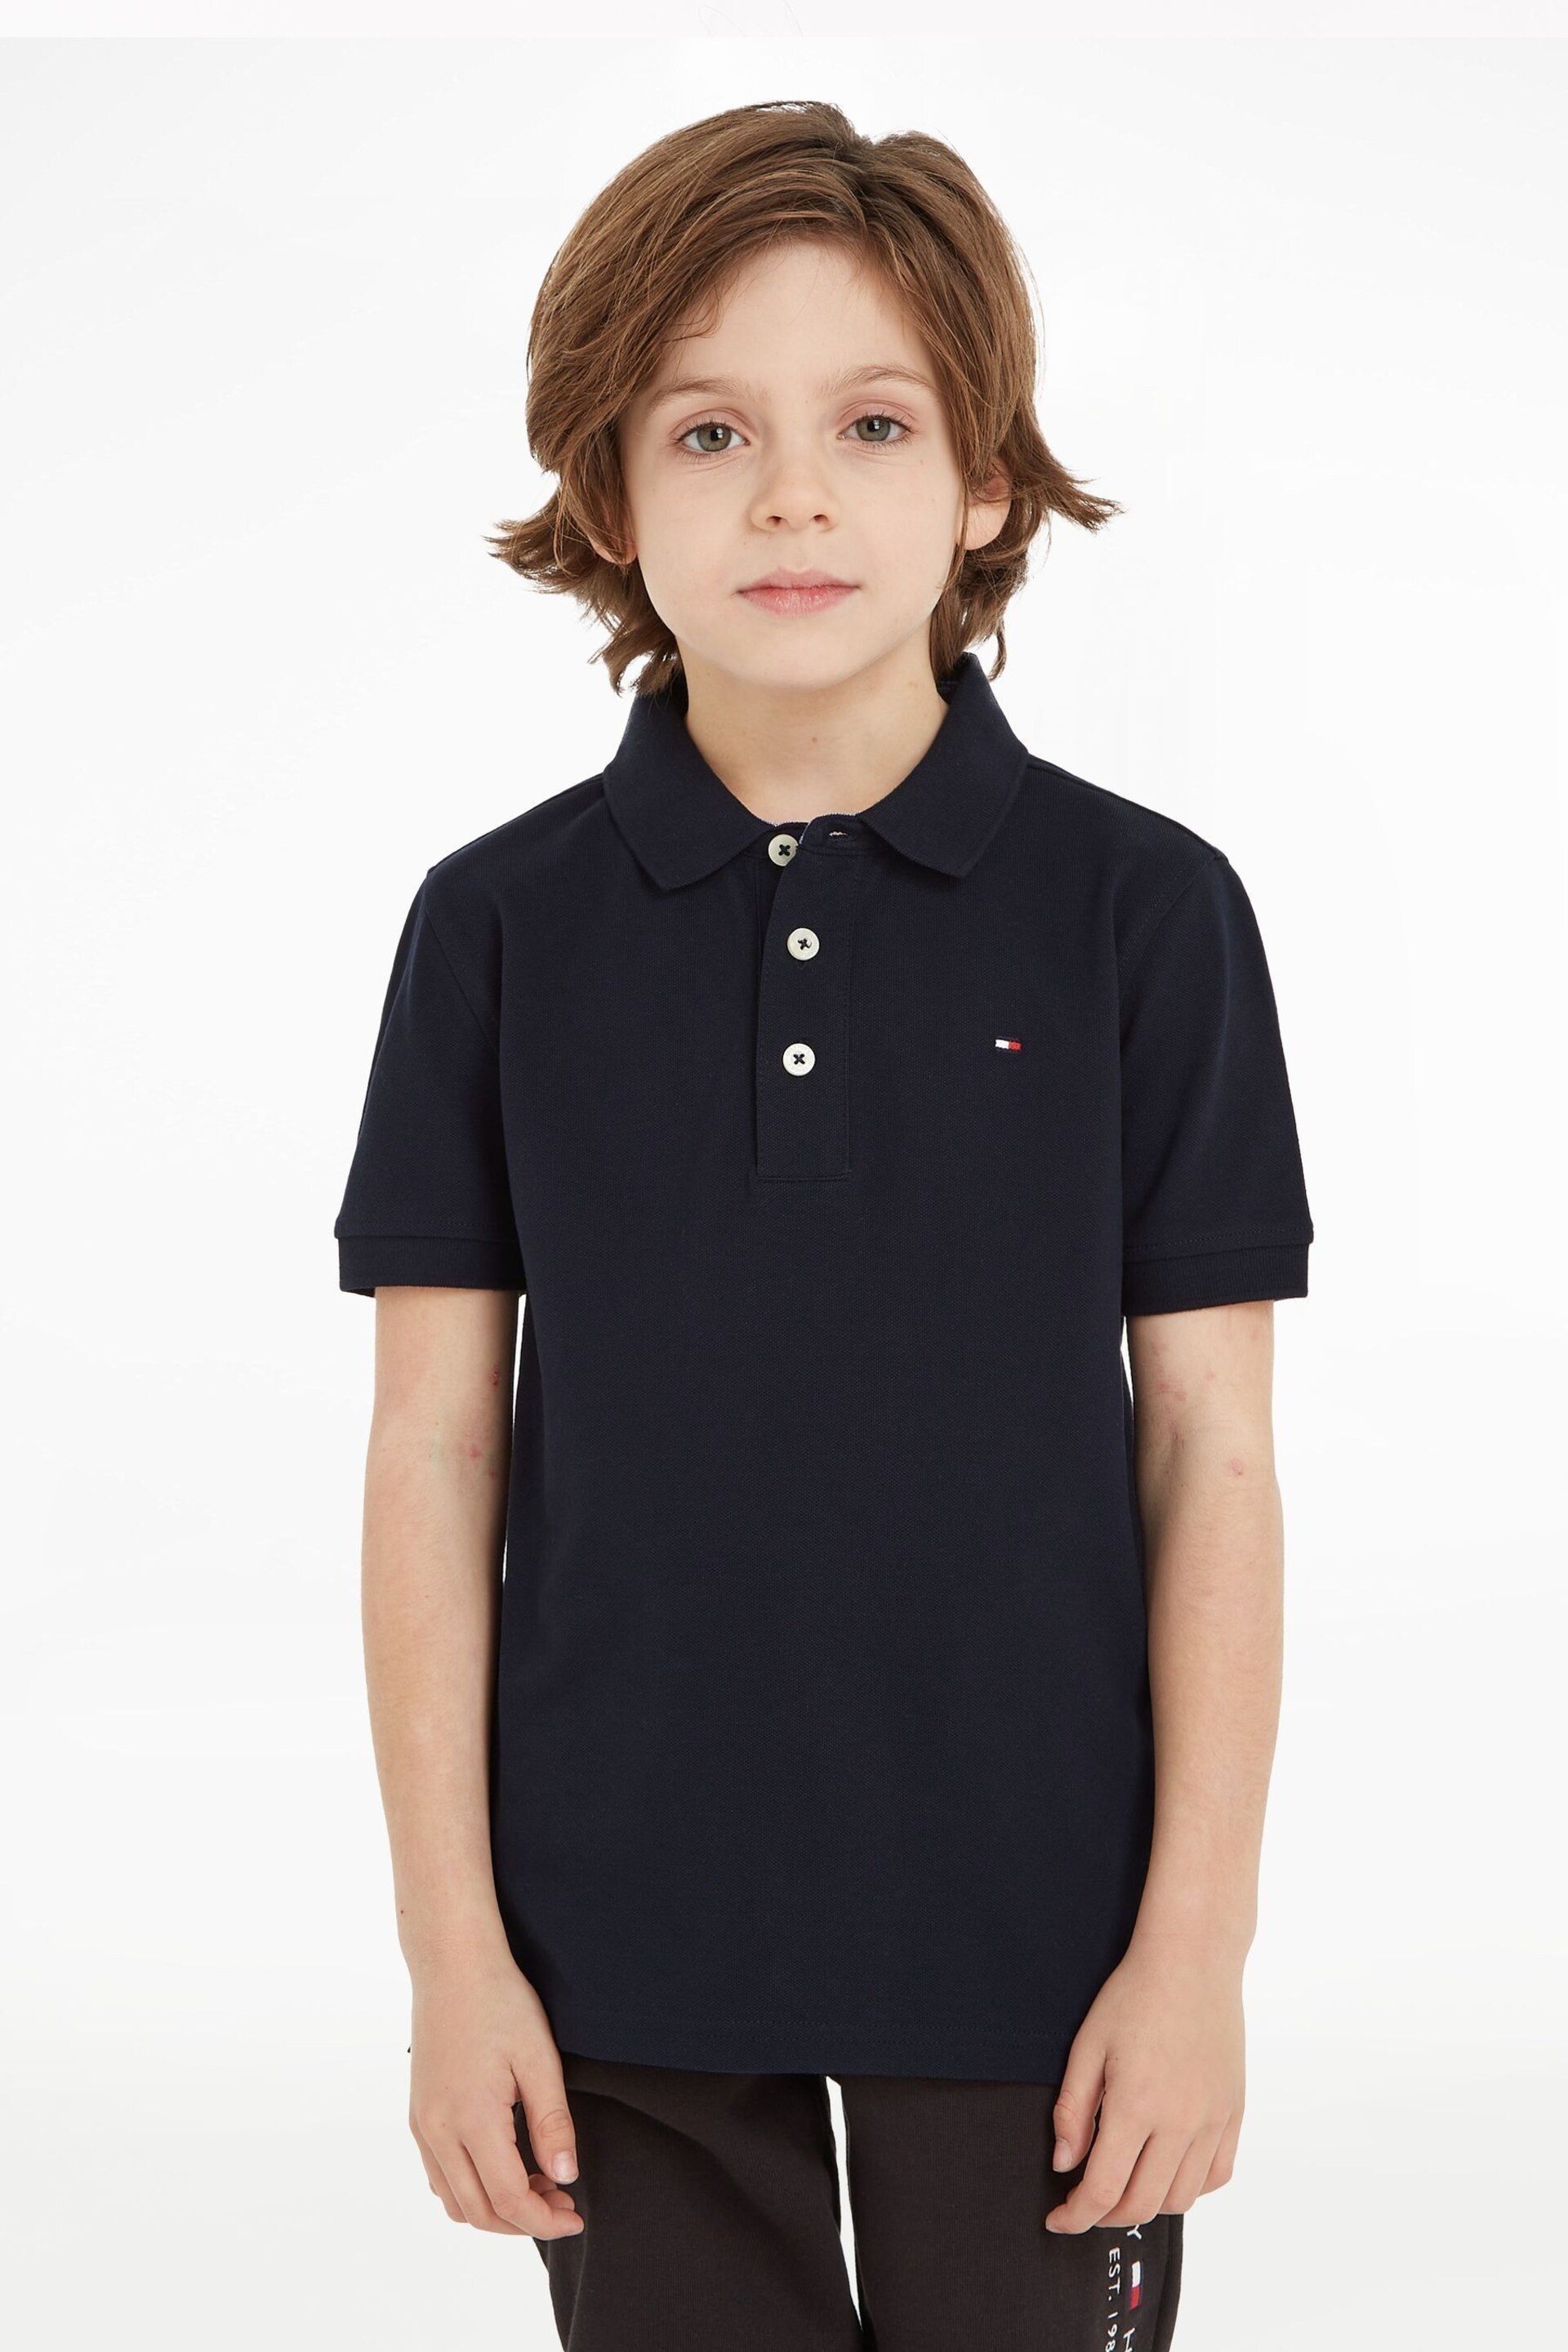 Tommy Hilfiger Boys Basic Polo Shirt - Image 1 of 5